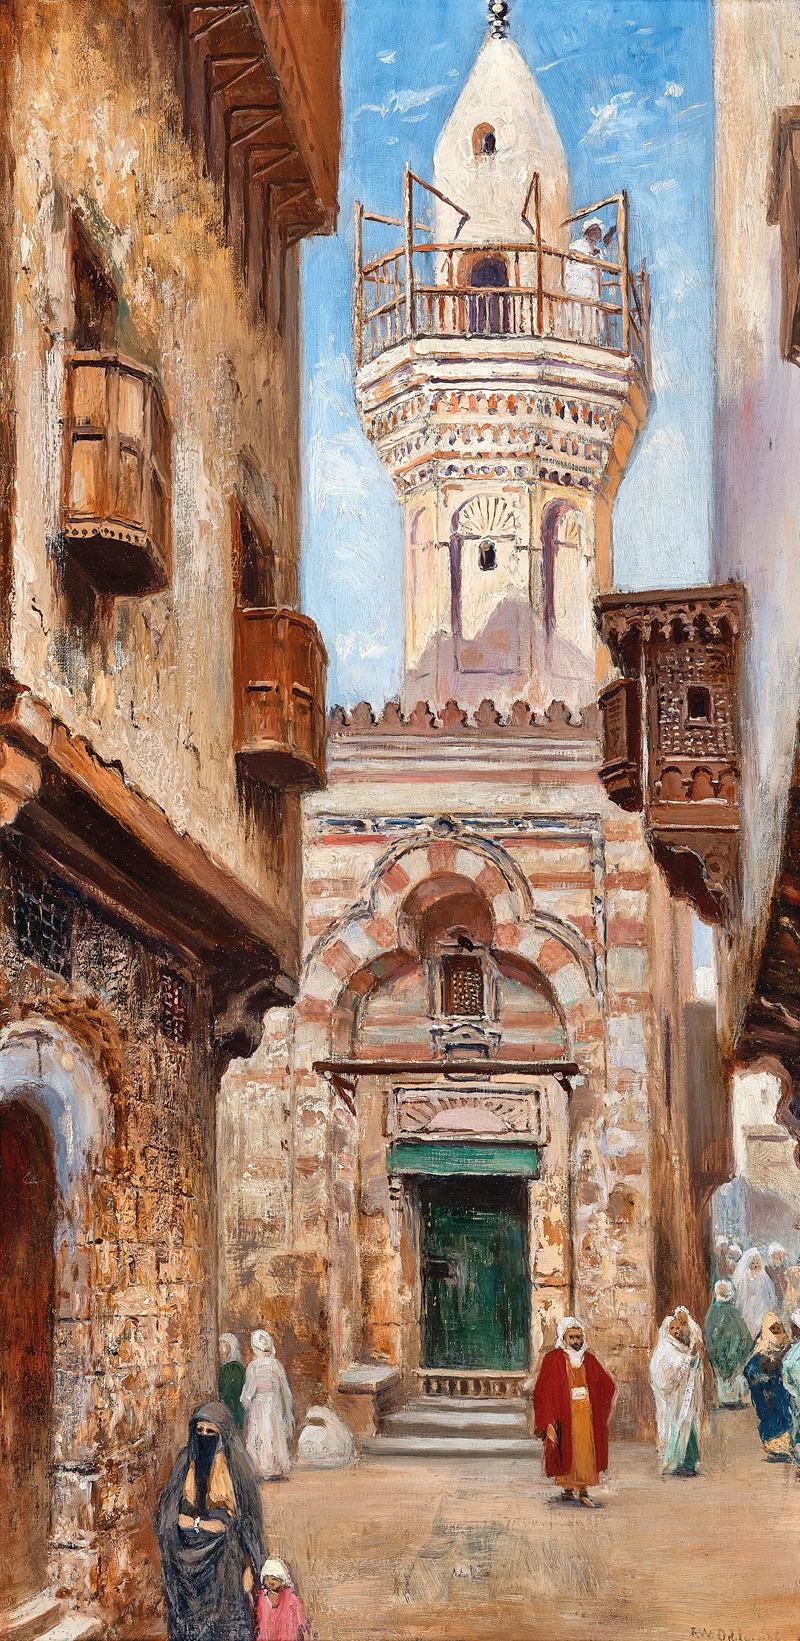 Frans Wilhelm Odelmark - Cairo, a street scene at Khan Al Khalili bazaar